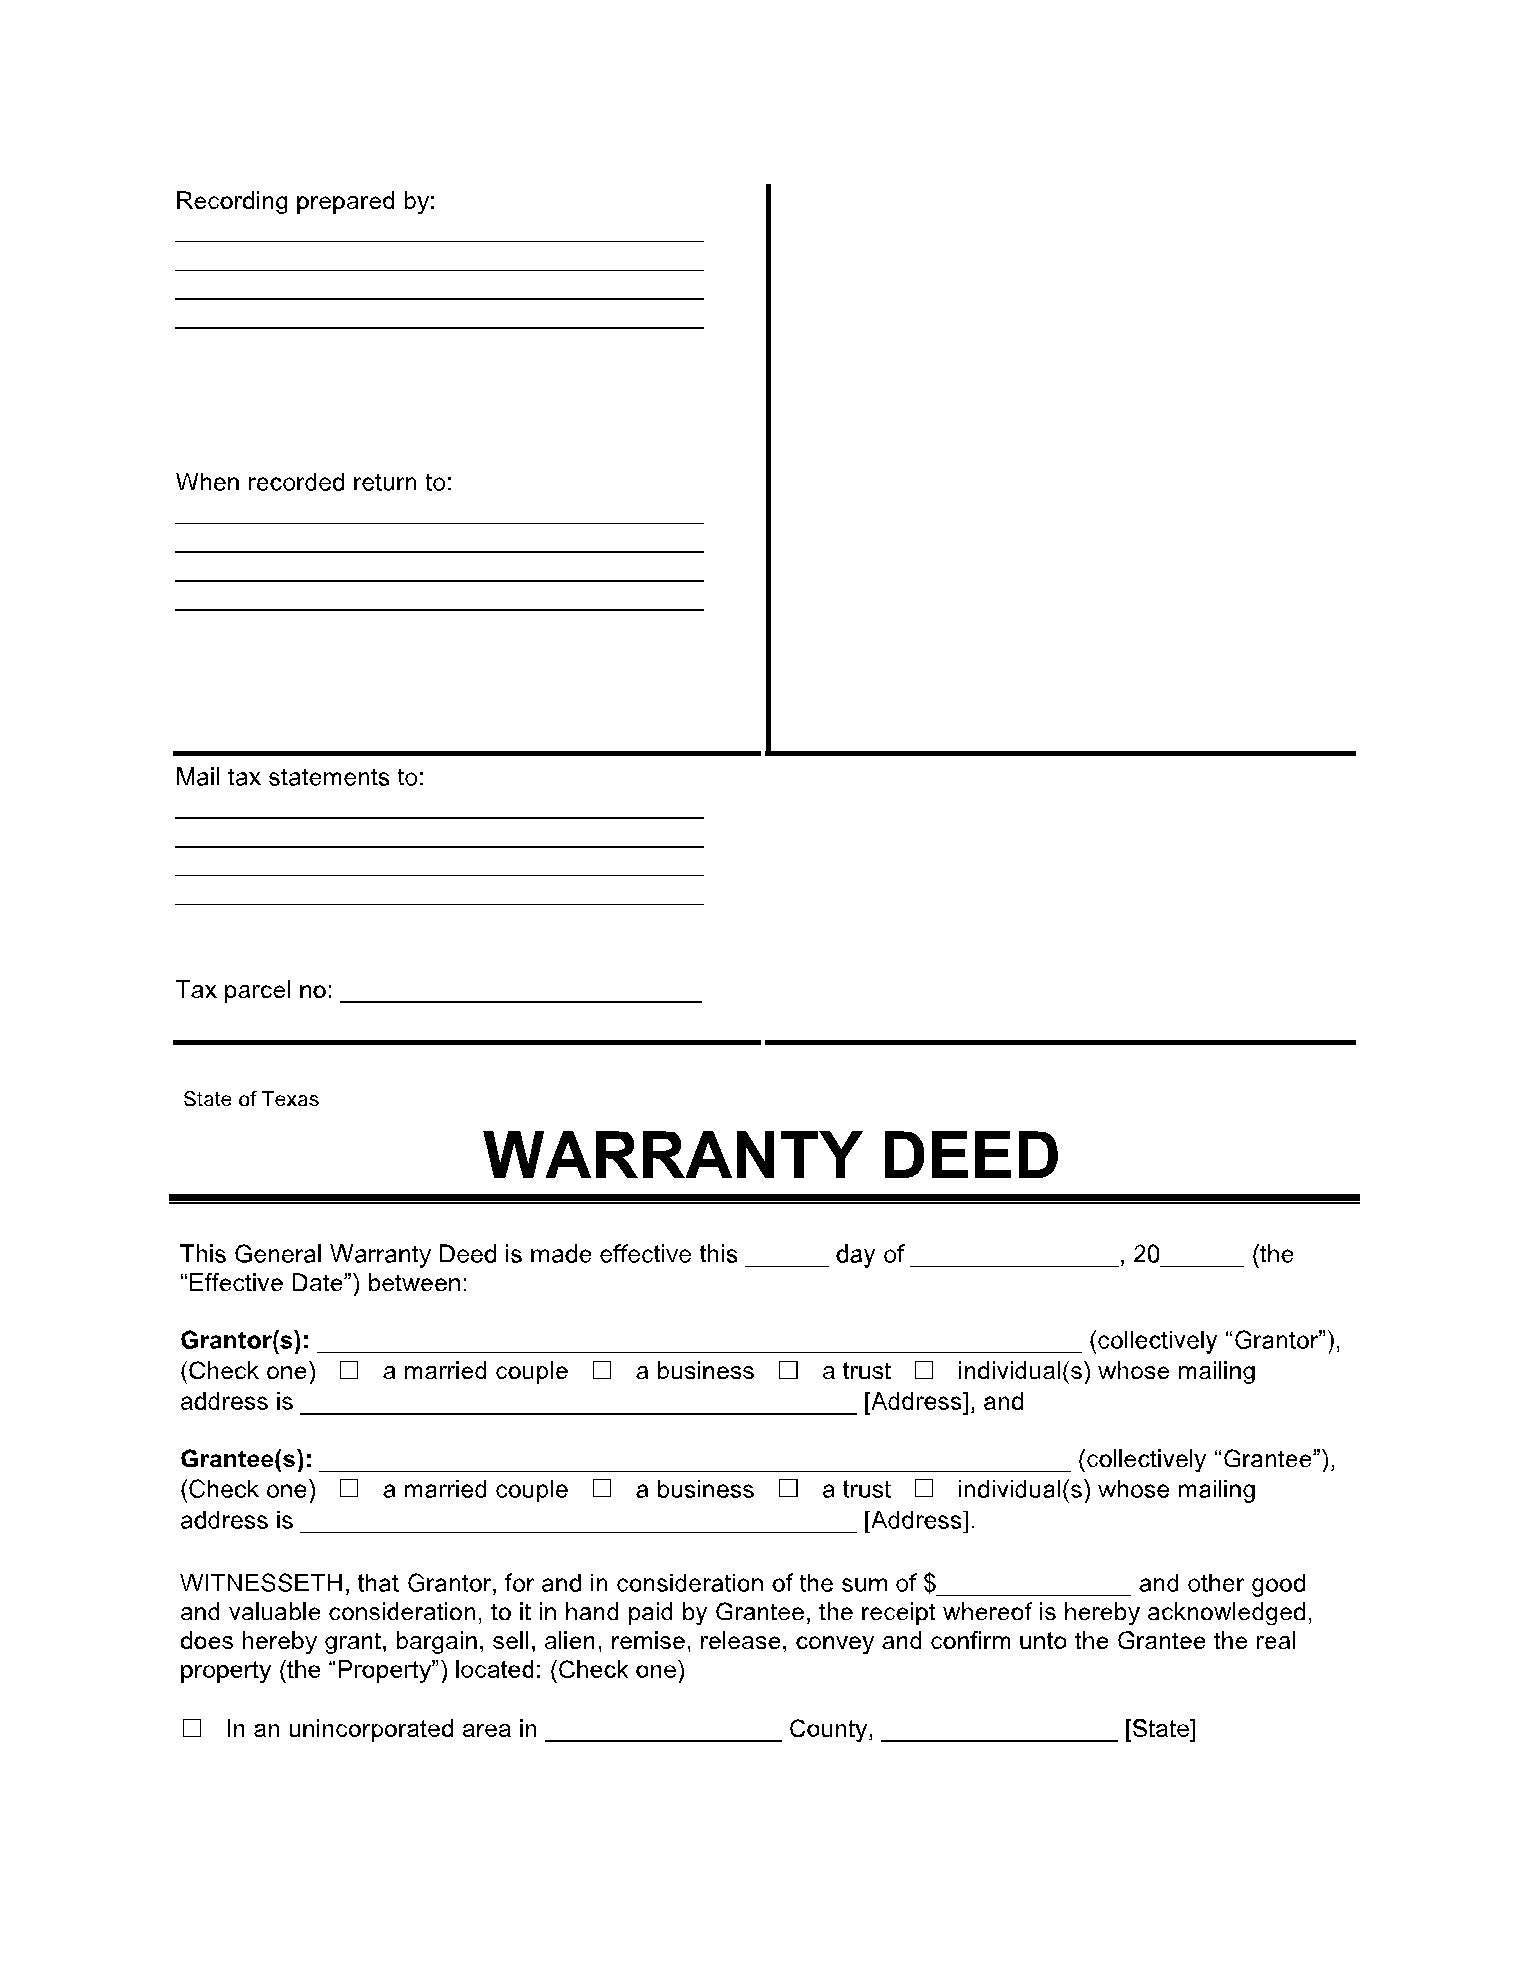 texas warranty deed form free download